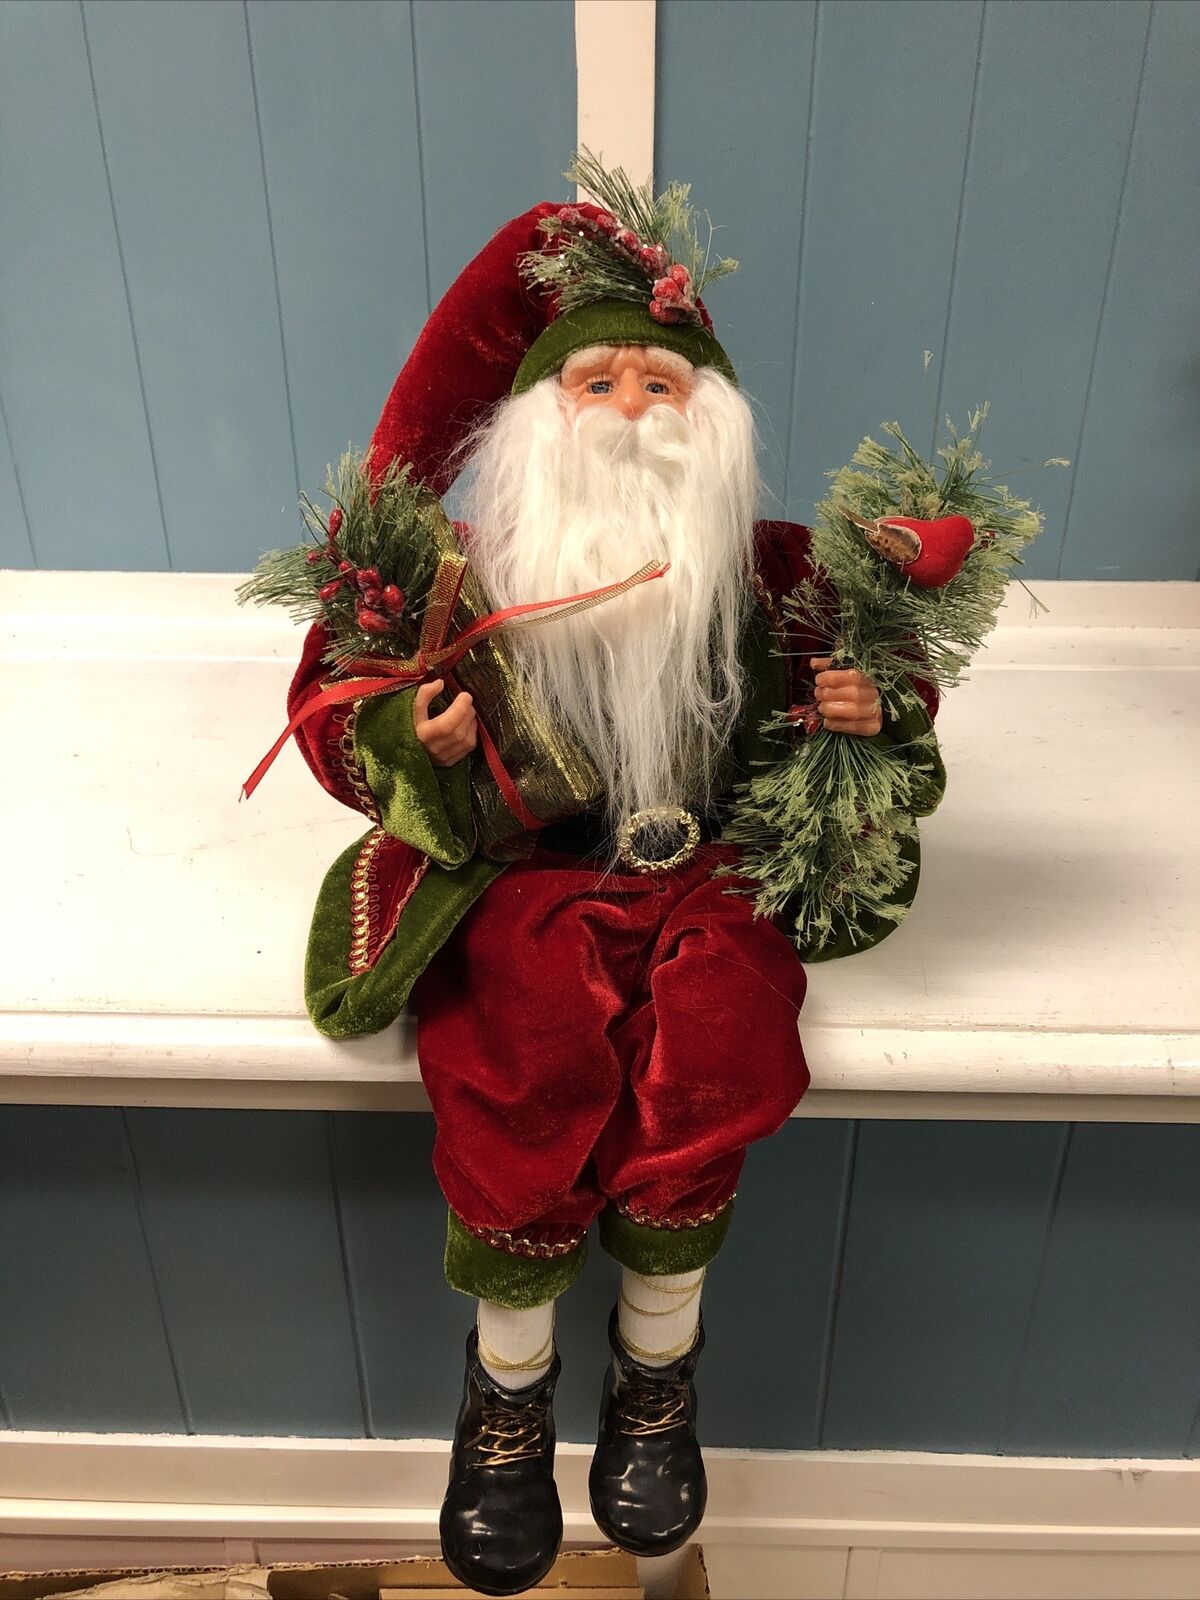 Christmas 22” Sitting Santa Figure Celebrate It 2019 Decoration  St. Nick